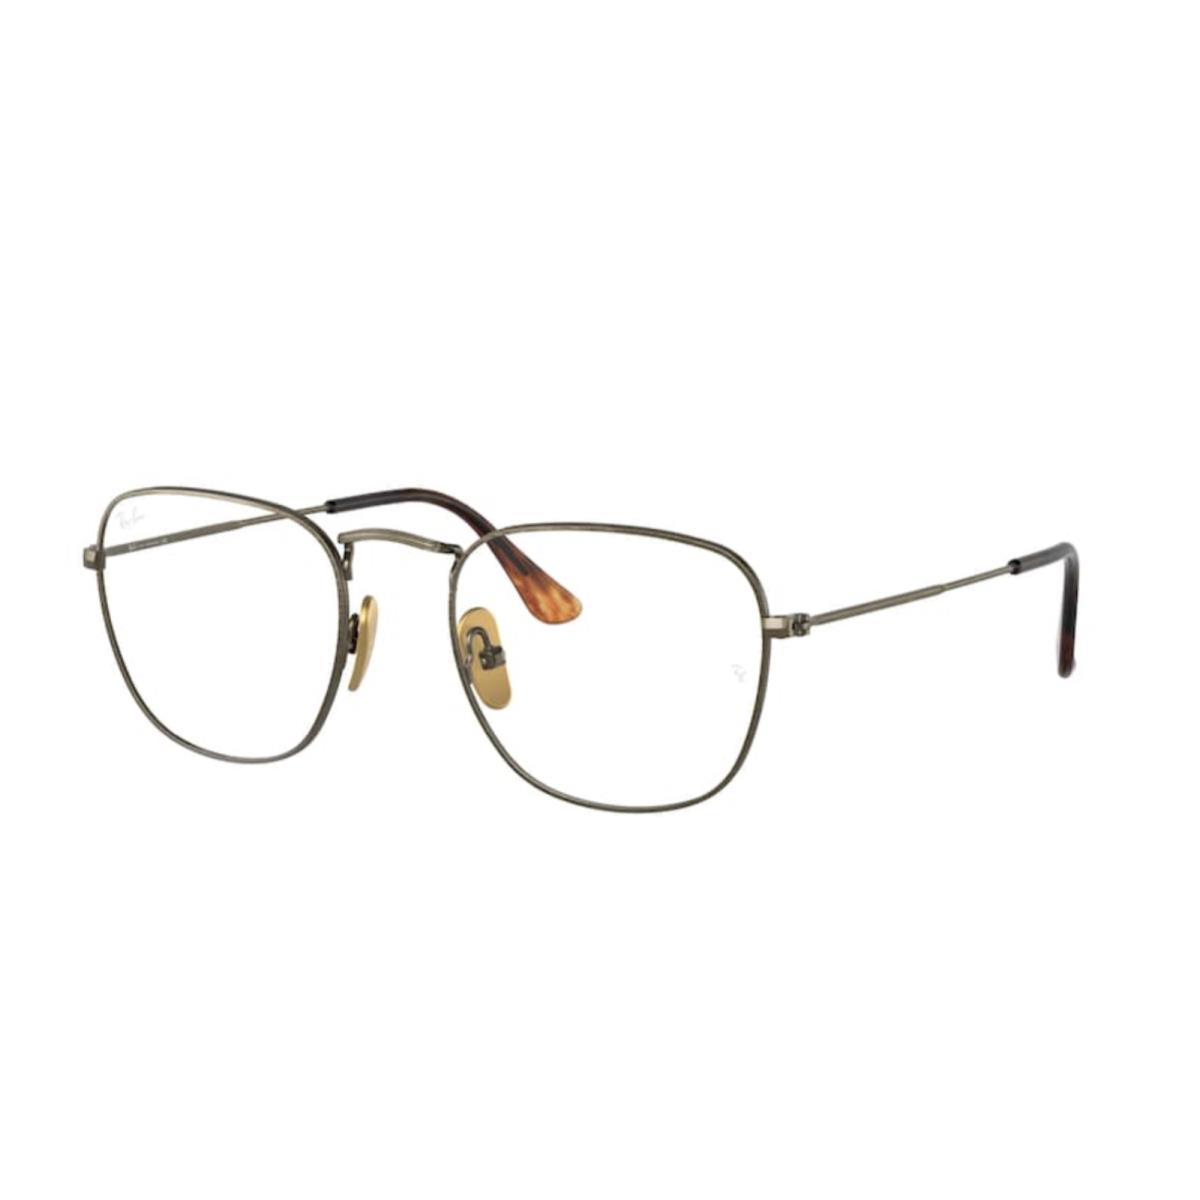 Ray-ban Titanium Eyeglasses RB 8157V Frank 1222 51-20 Antique Gold Frames - Antique Gold, Frame: Antique Gold, Lens: